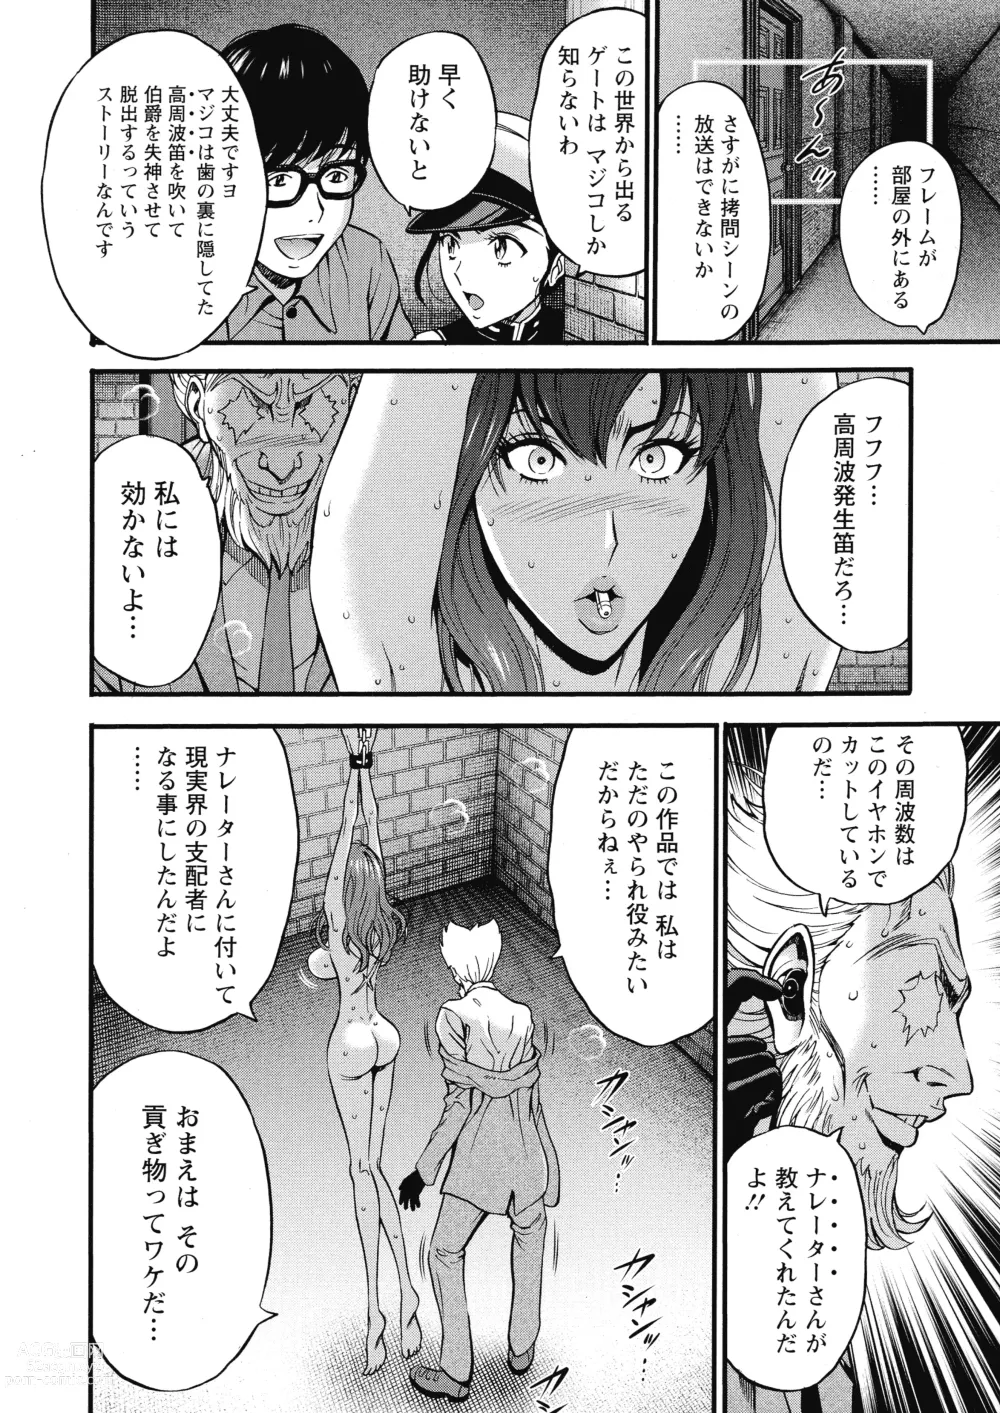 Page 13 of manga Watashi o Ikasete Haramasete... ~Anime Diver Z~ 2